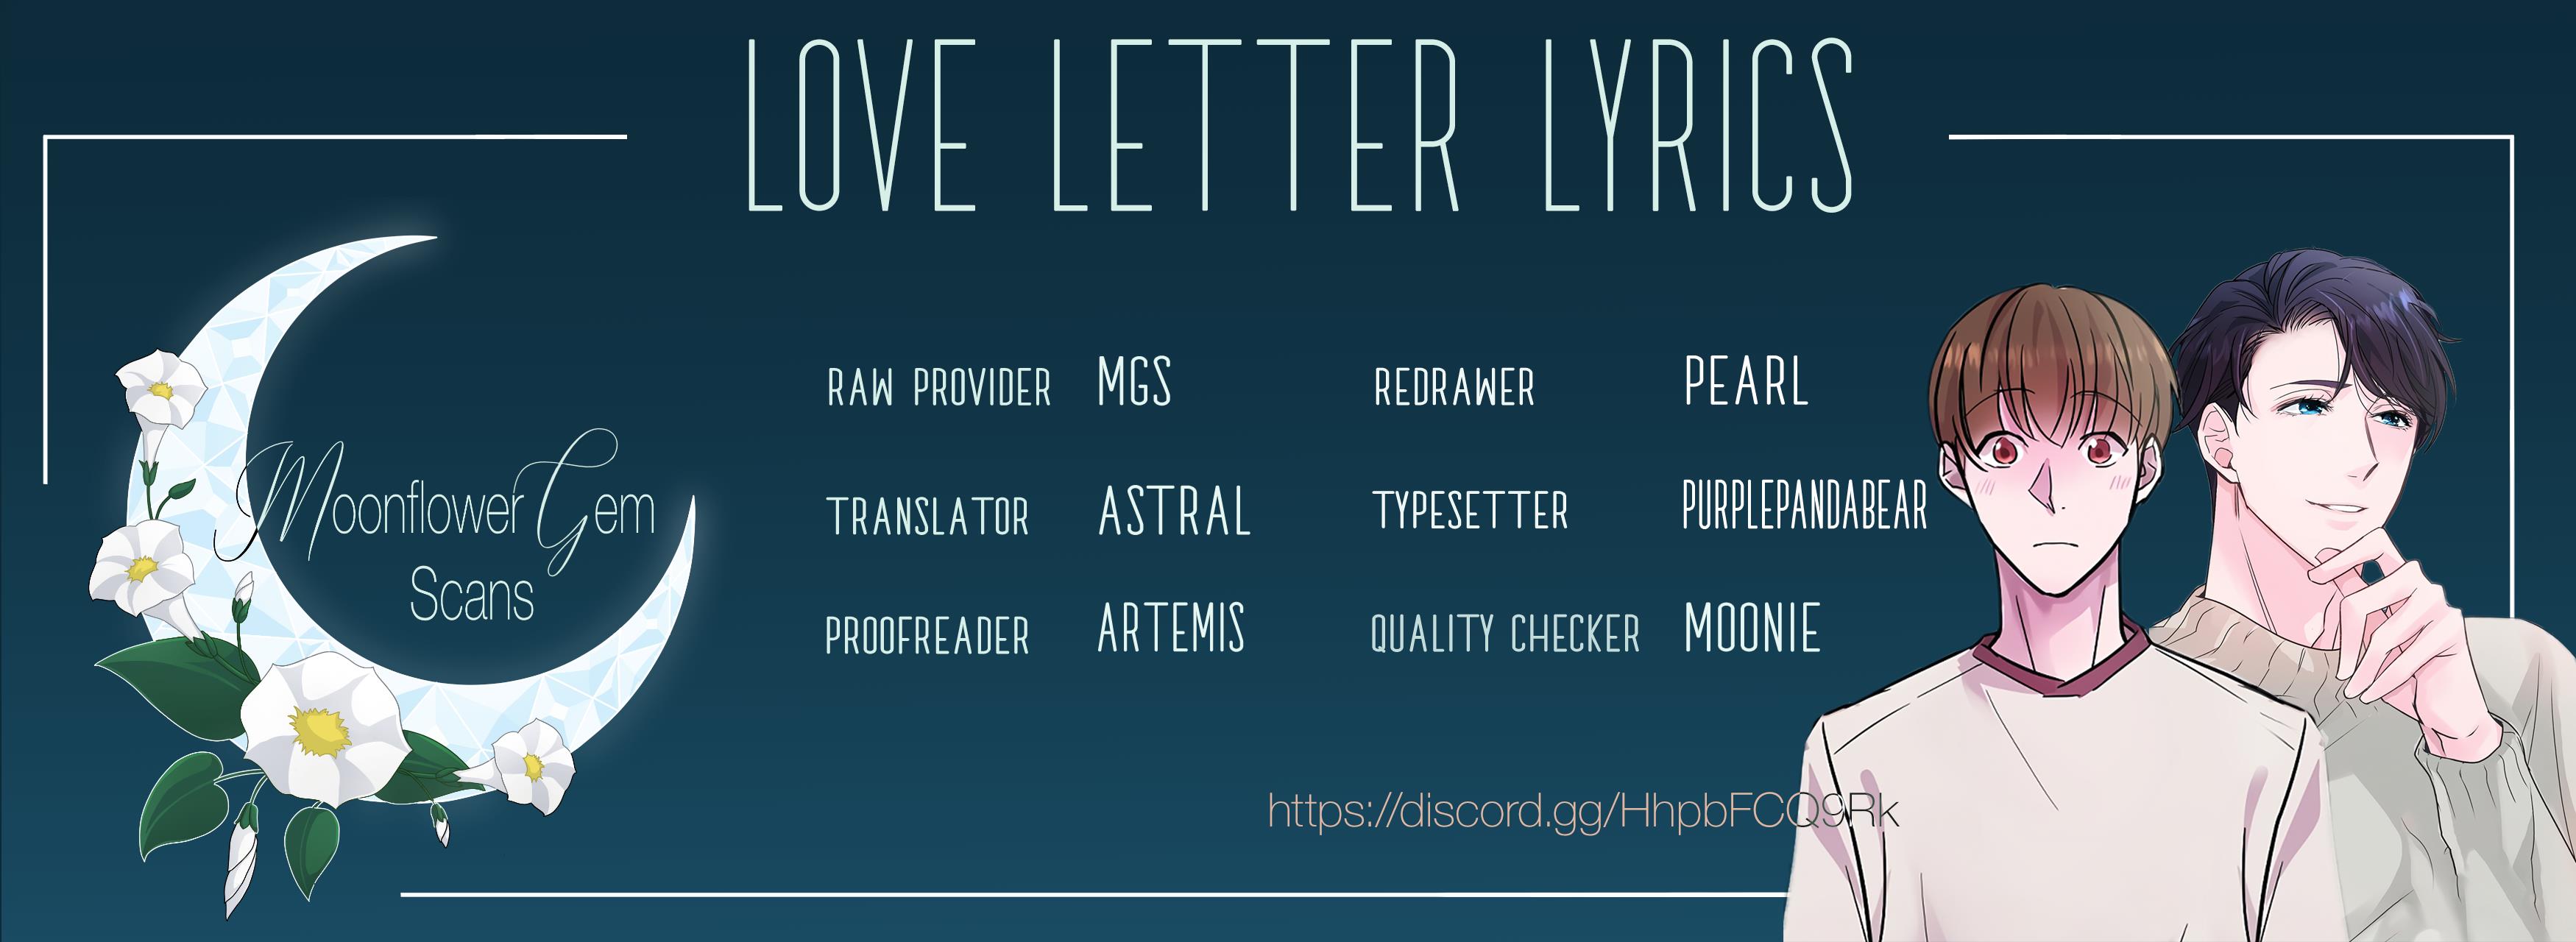 Love Letter Lyrics Chapter 0: Prologue - Picture 1